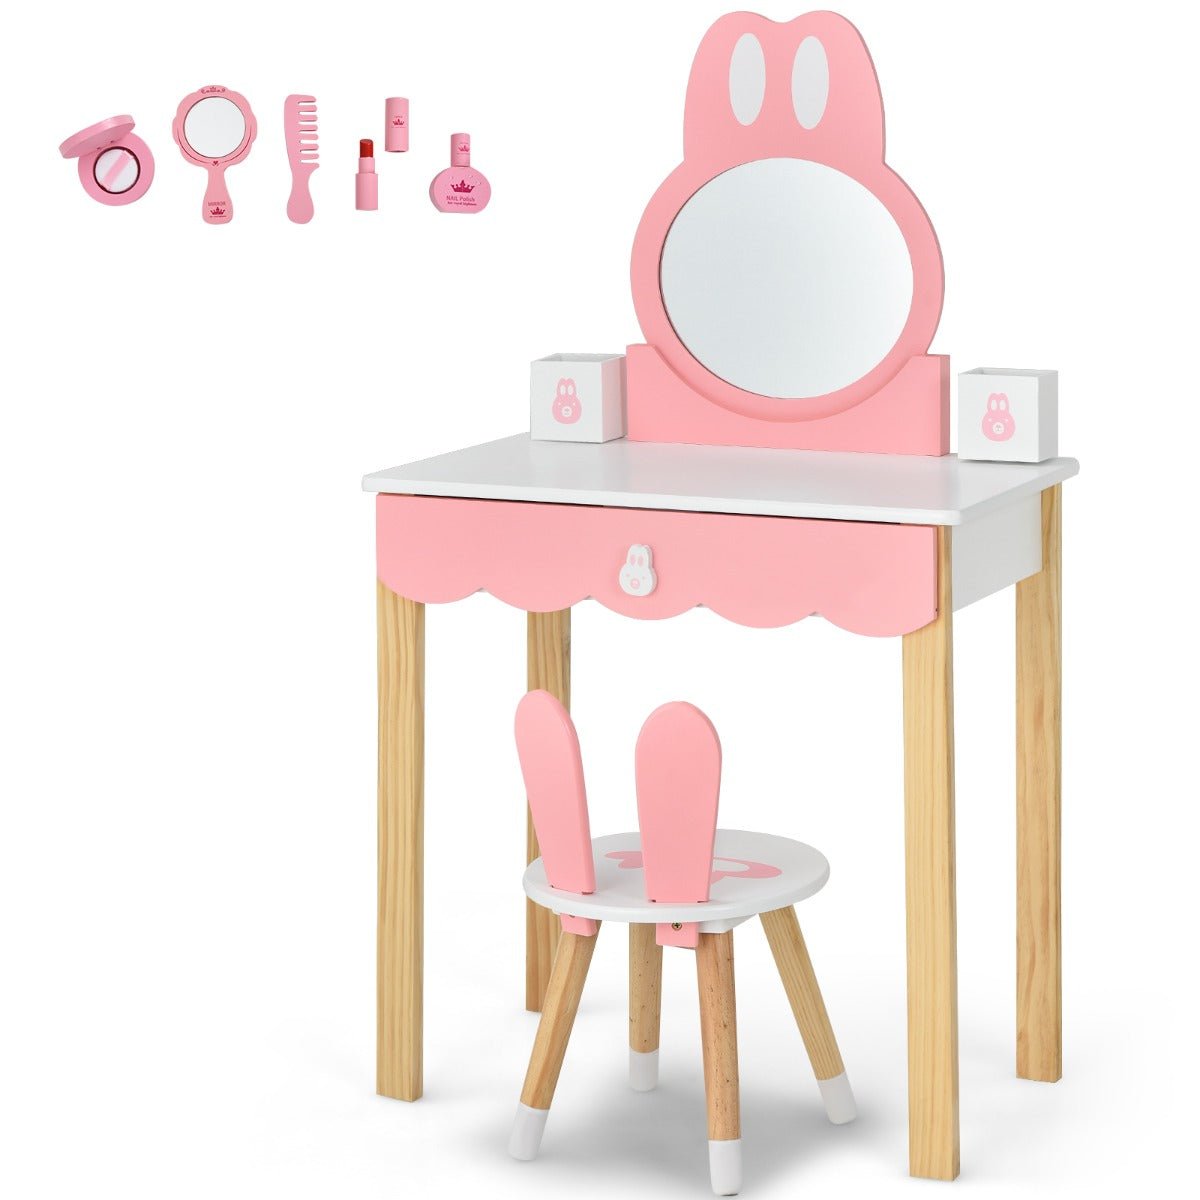 Children's Makeup Vanity Set - Playful Dressing Table for Imaginative Fun